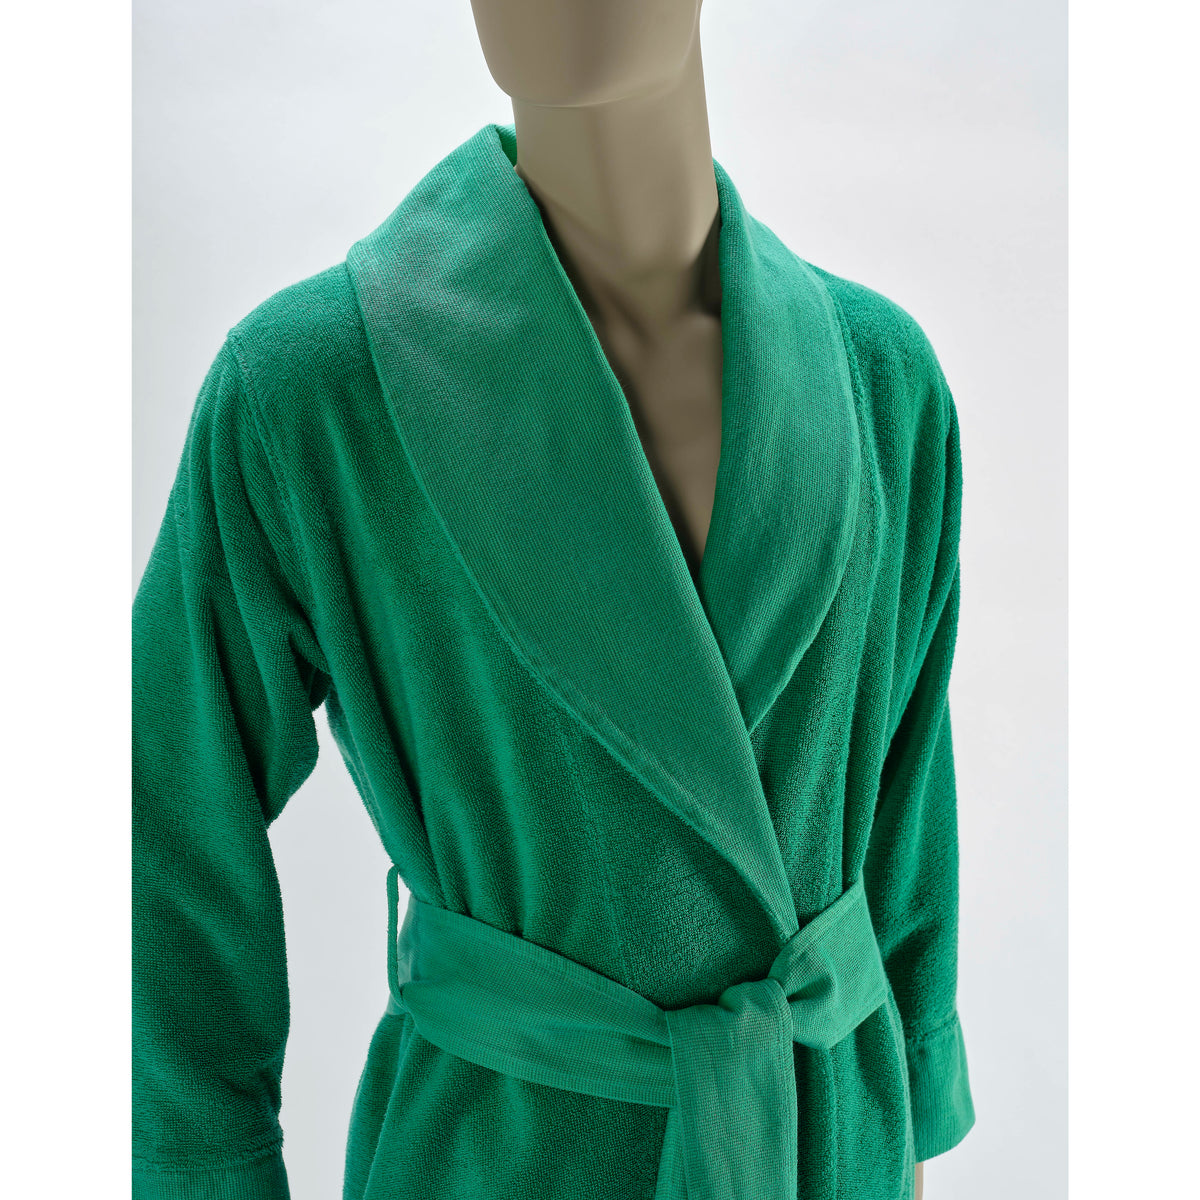 Abyss Amigo Bath Robe on Mannequin2 Emerald Fine Linens